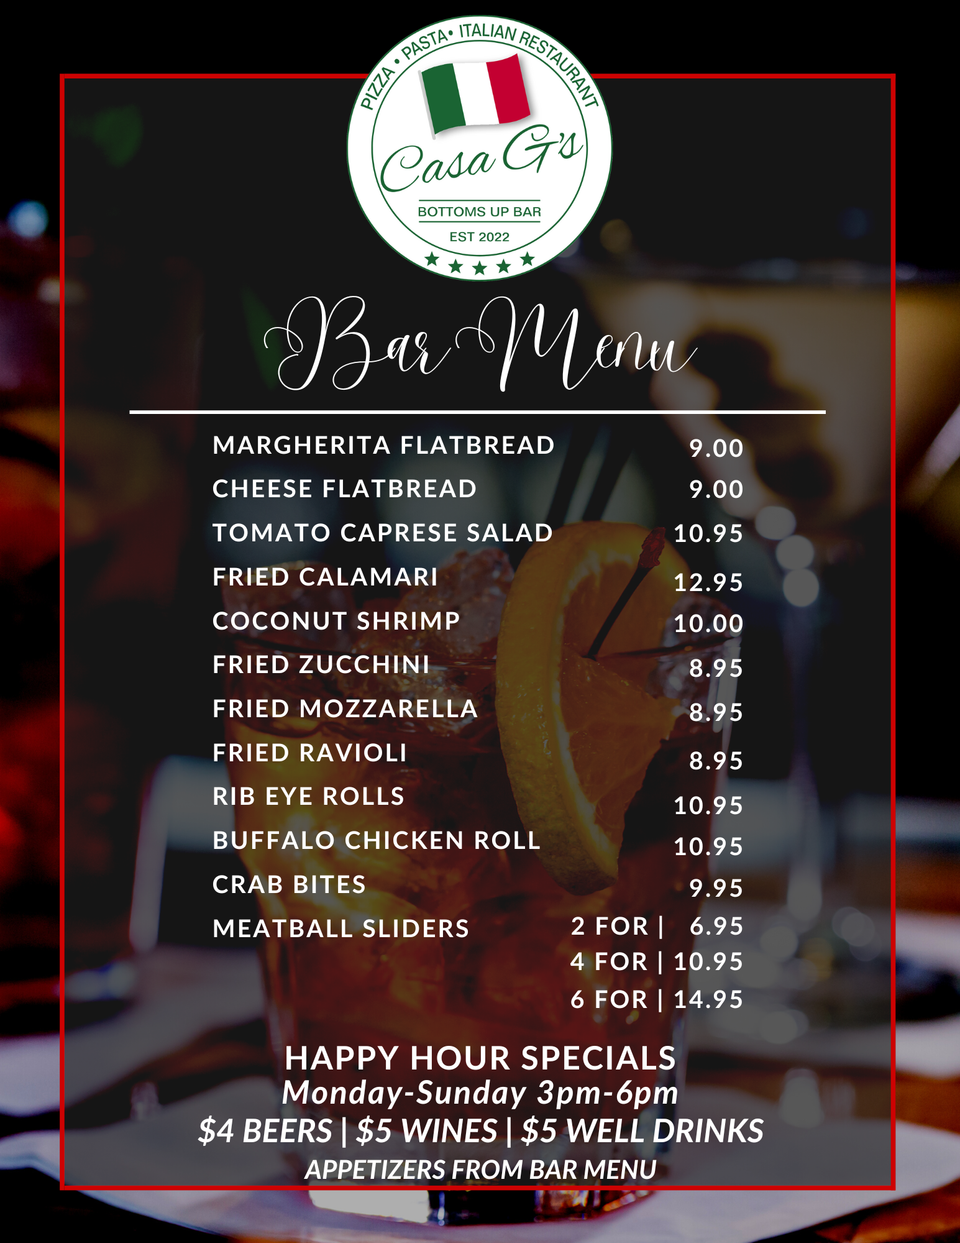 Casa g's bar menu 12 6 22 8.5x11